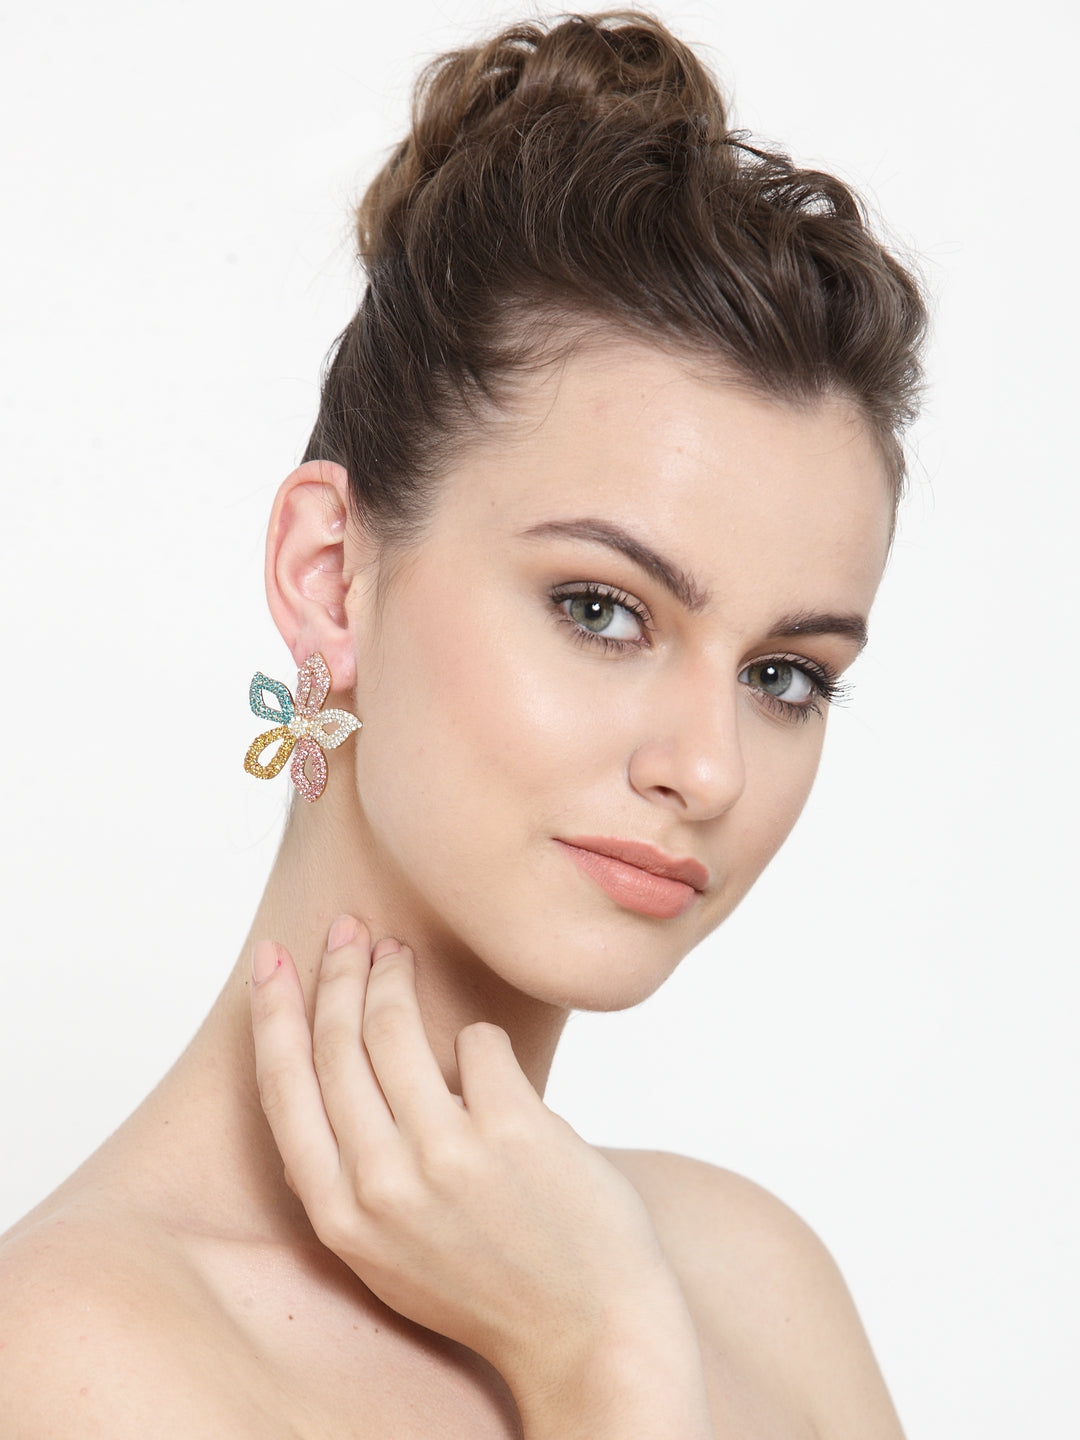 Bohemian Crystal Studded Flower Earrings